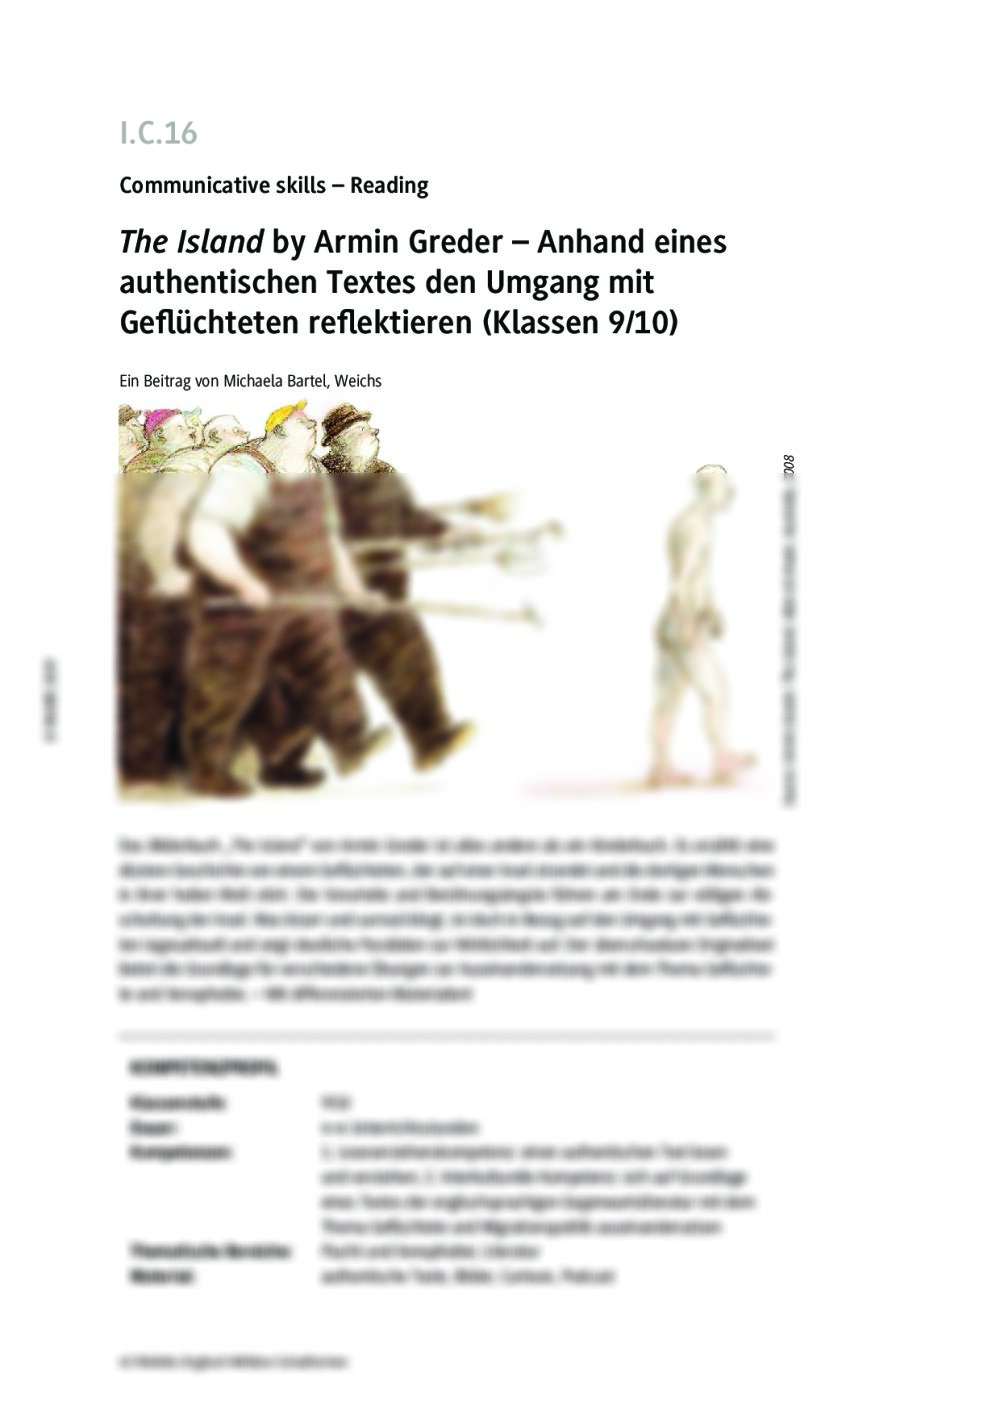 "The Island" by Armin Greder - Seite 1